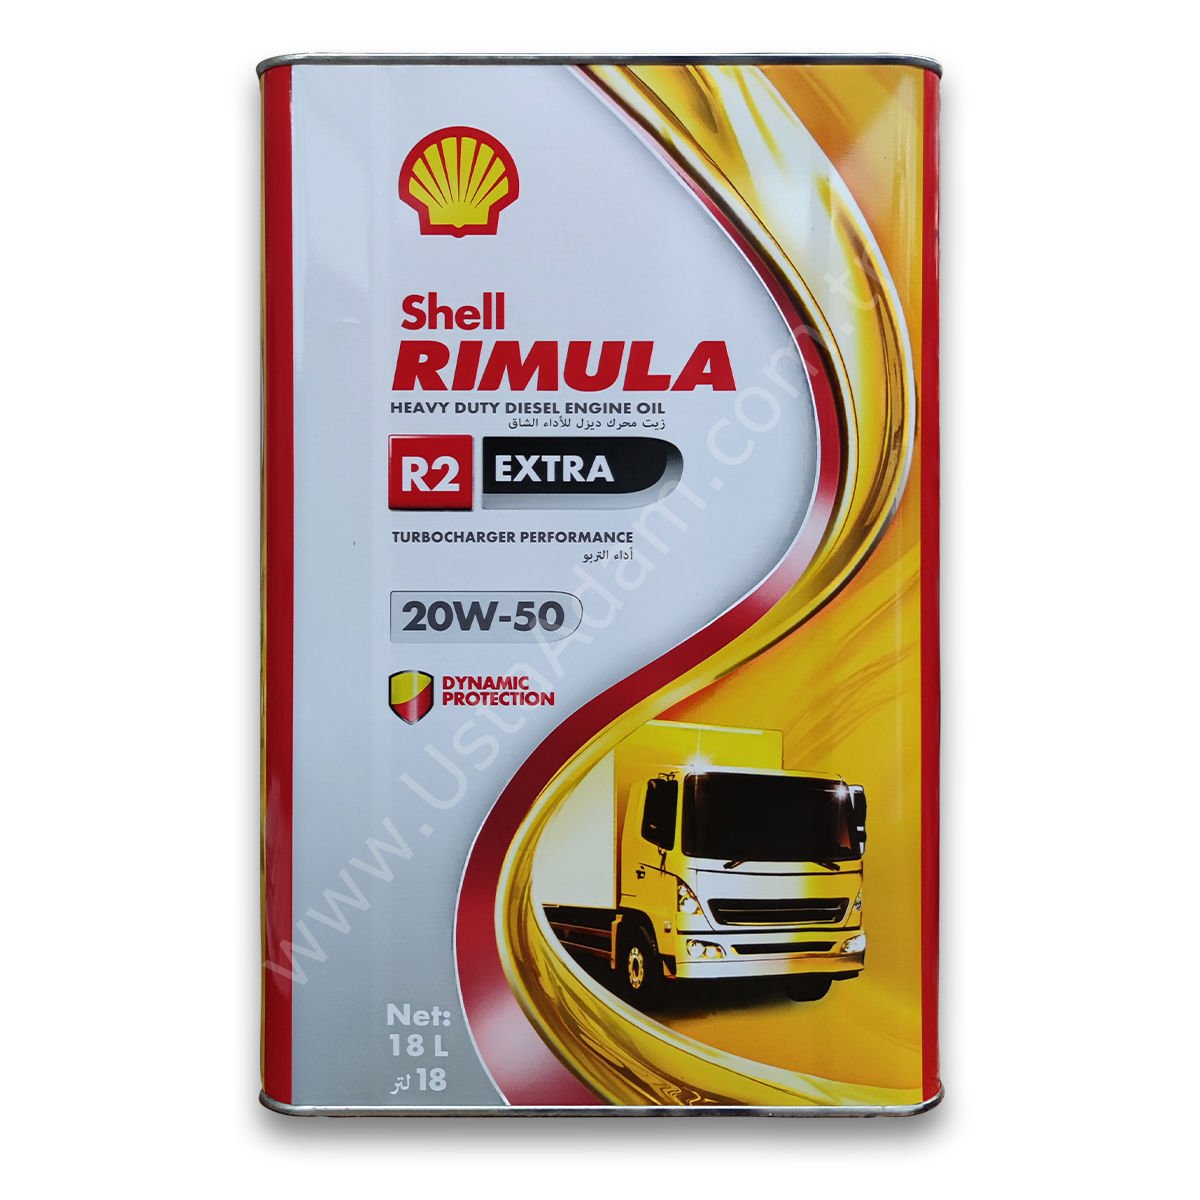 Shell Rimula R2 Extra 20w-50 Dizel Motor Yağı - 18 LT